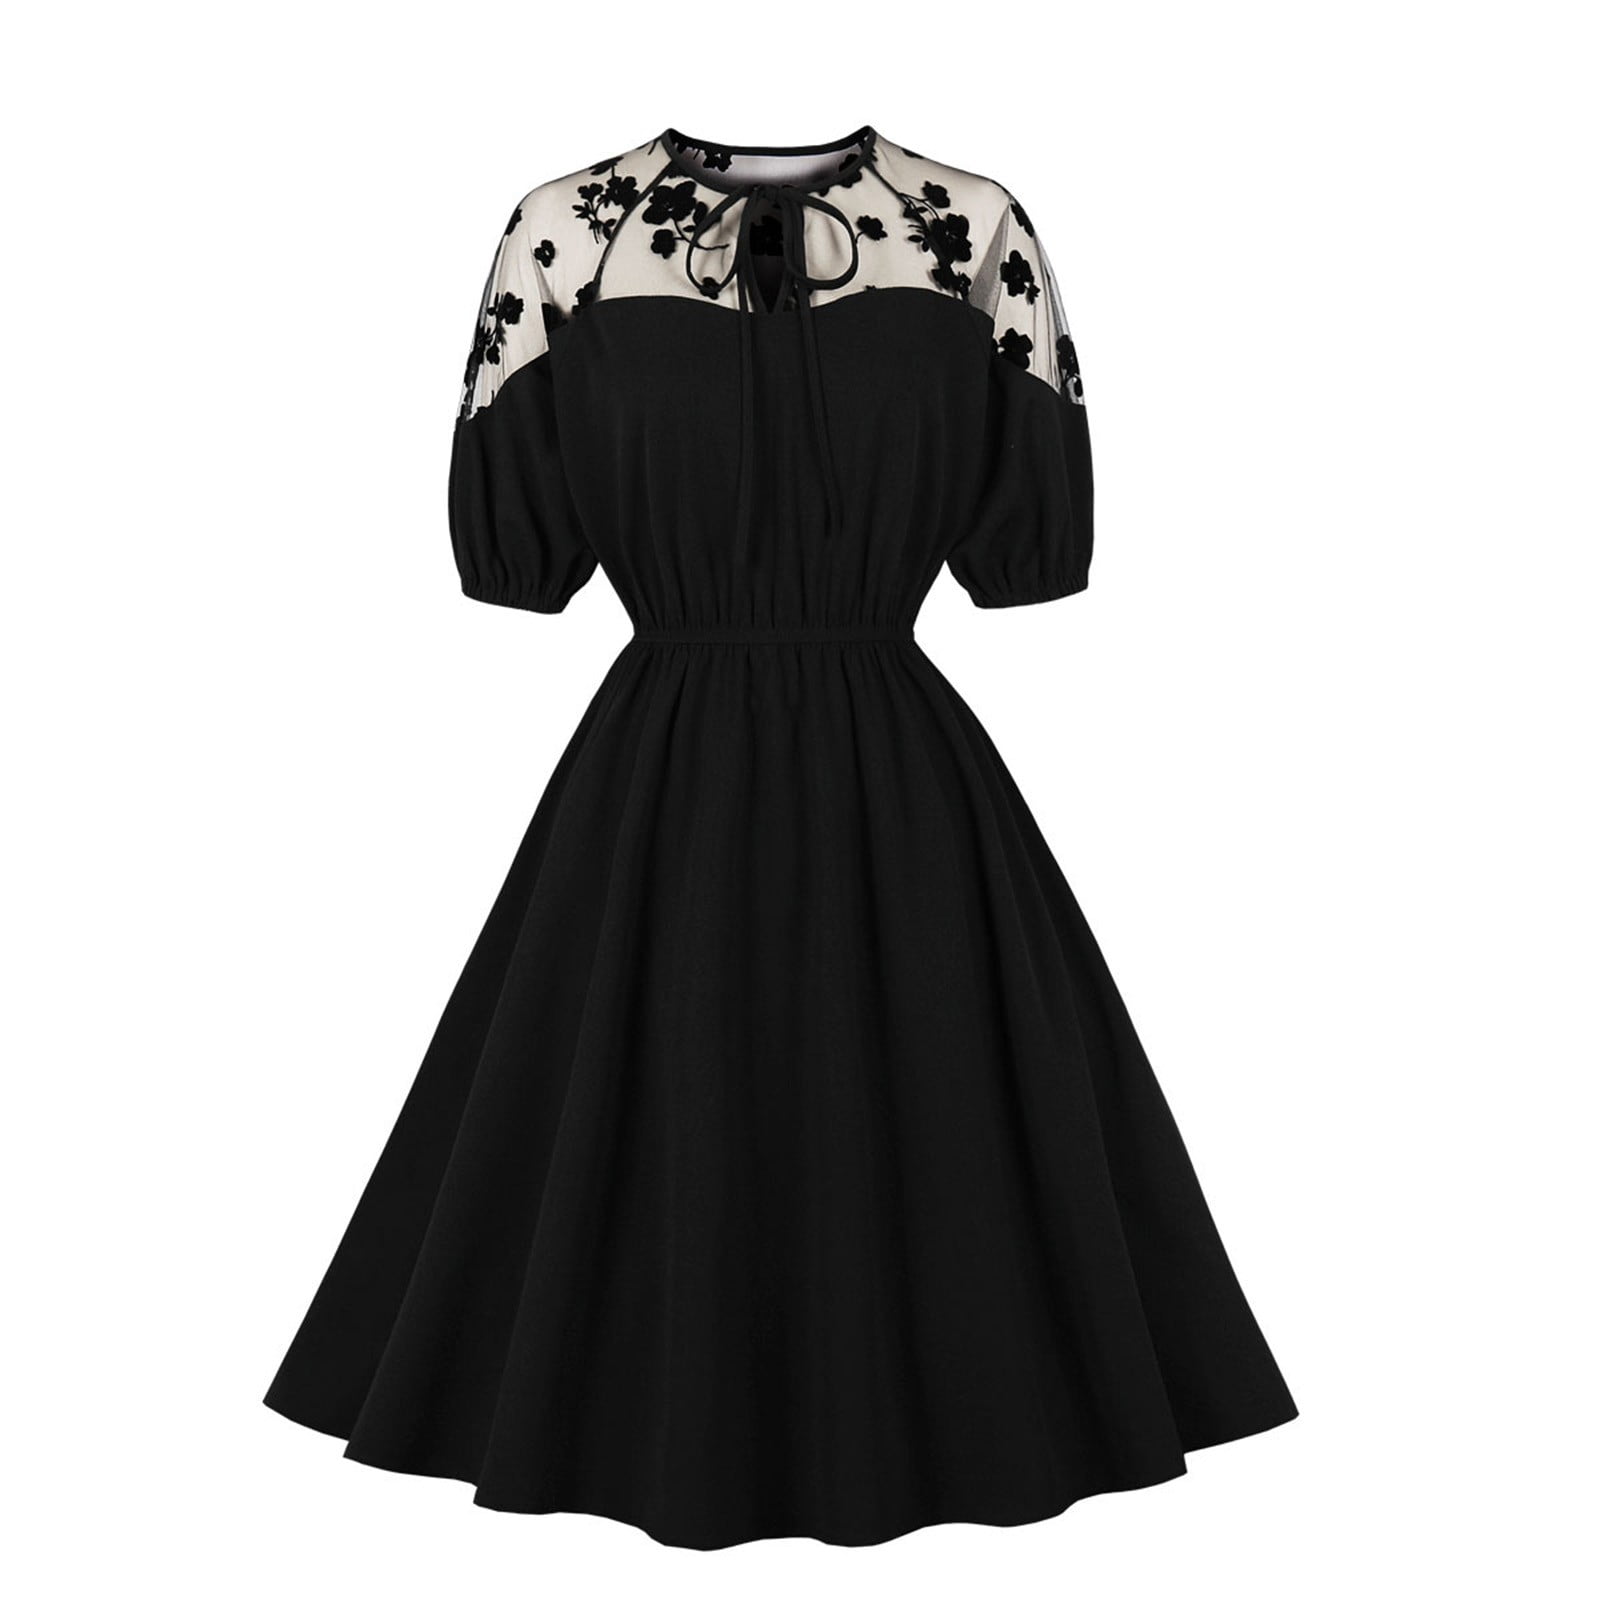 elegant black dress for funeral